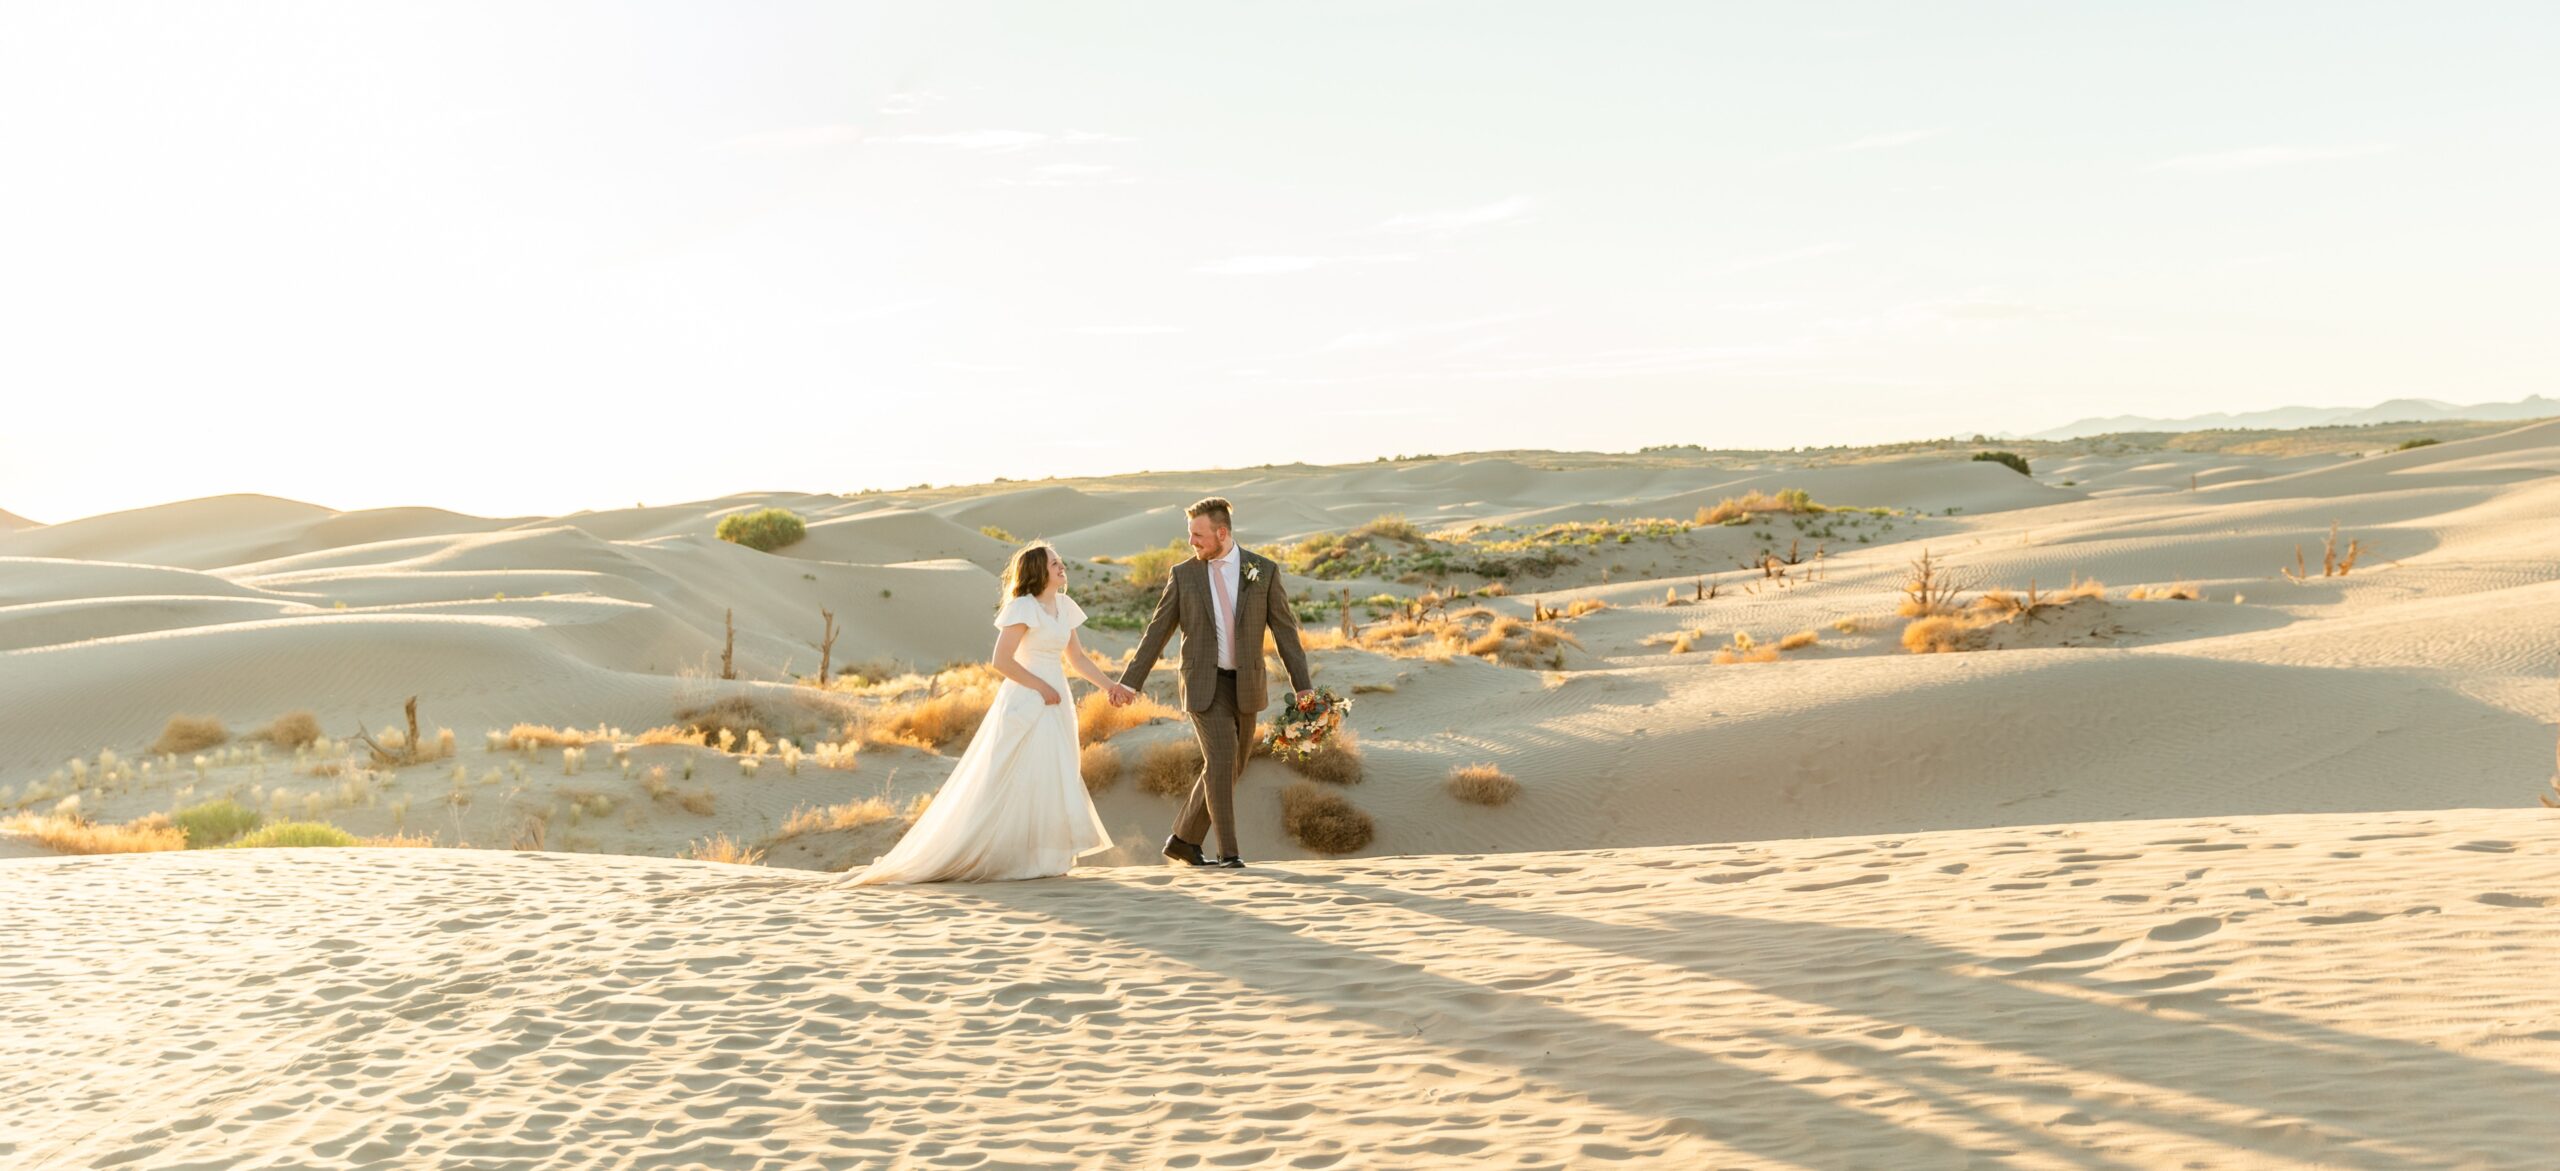 little sahara sand dunes bridal session